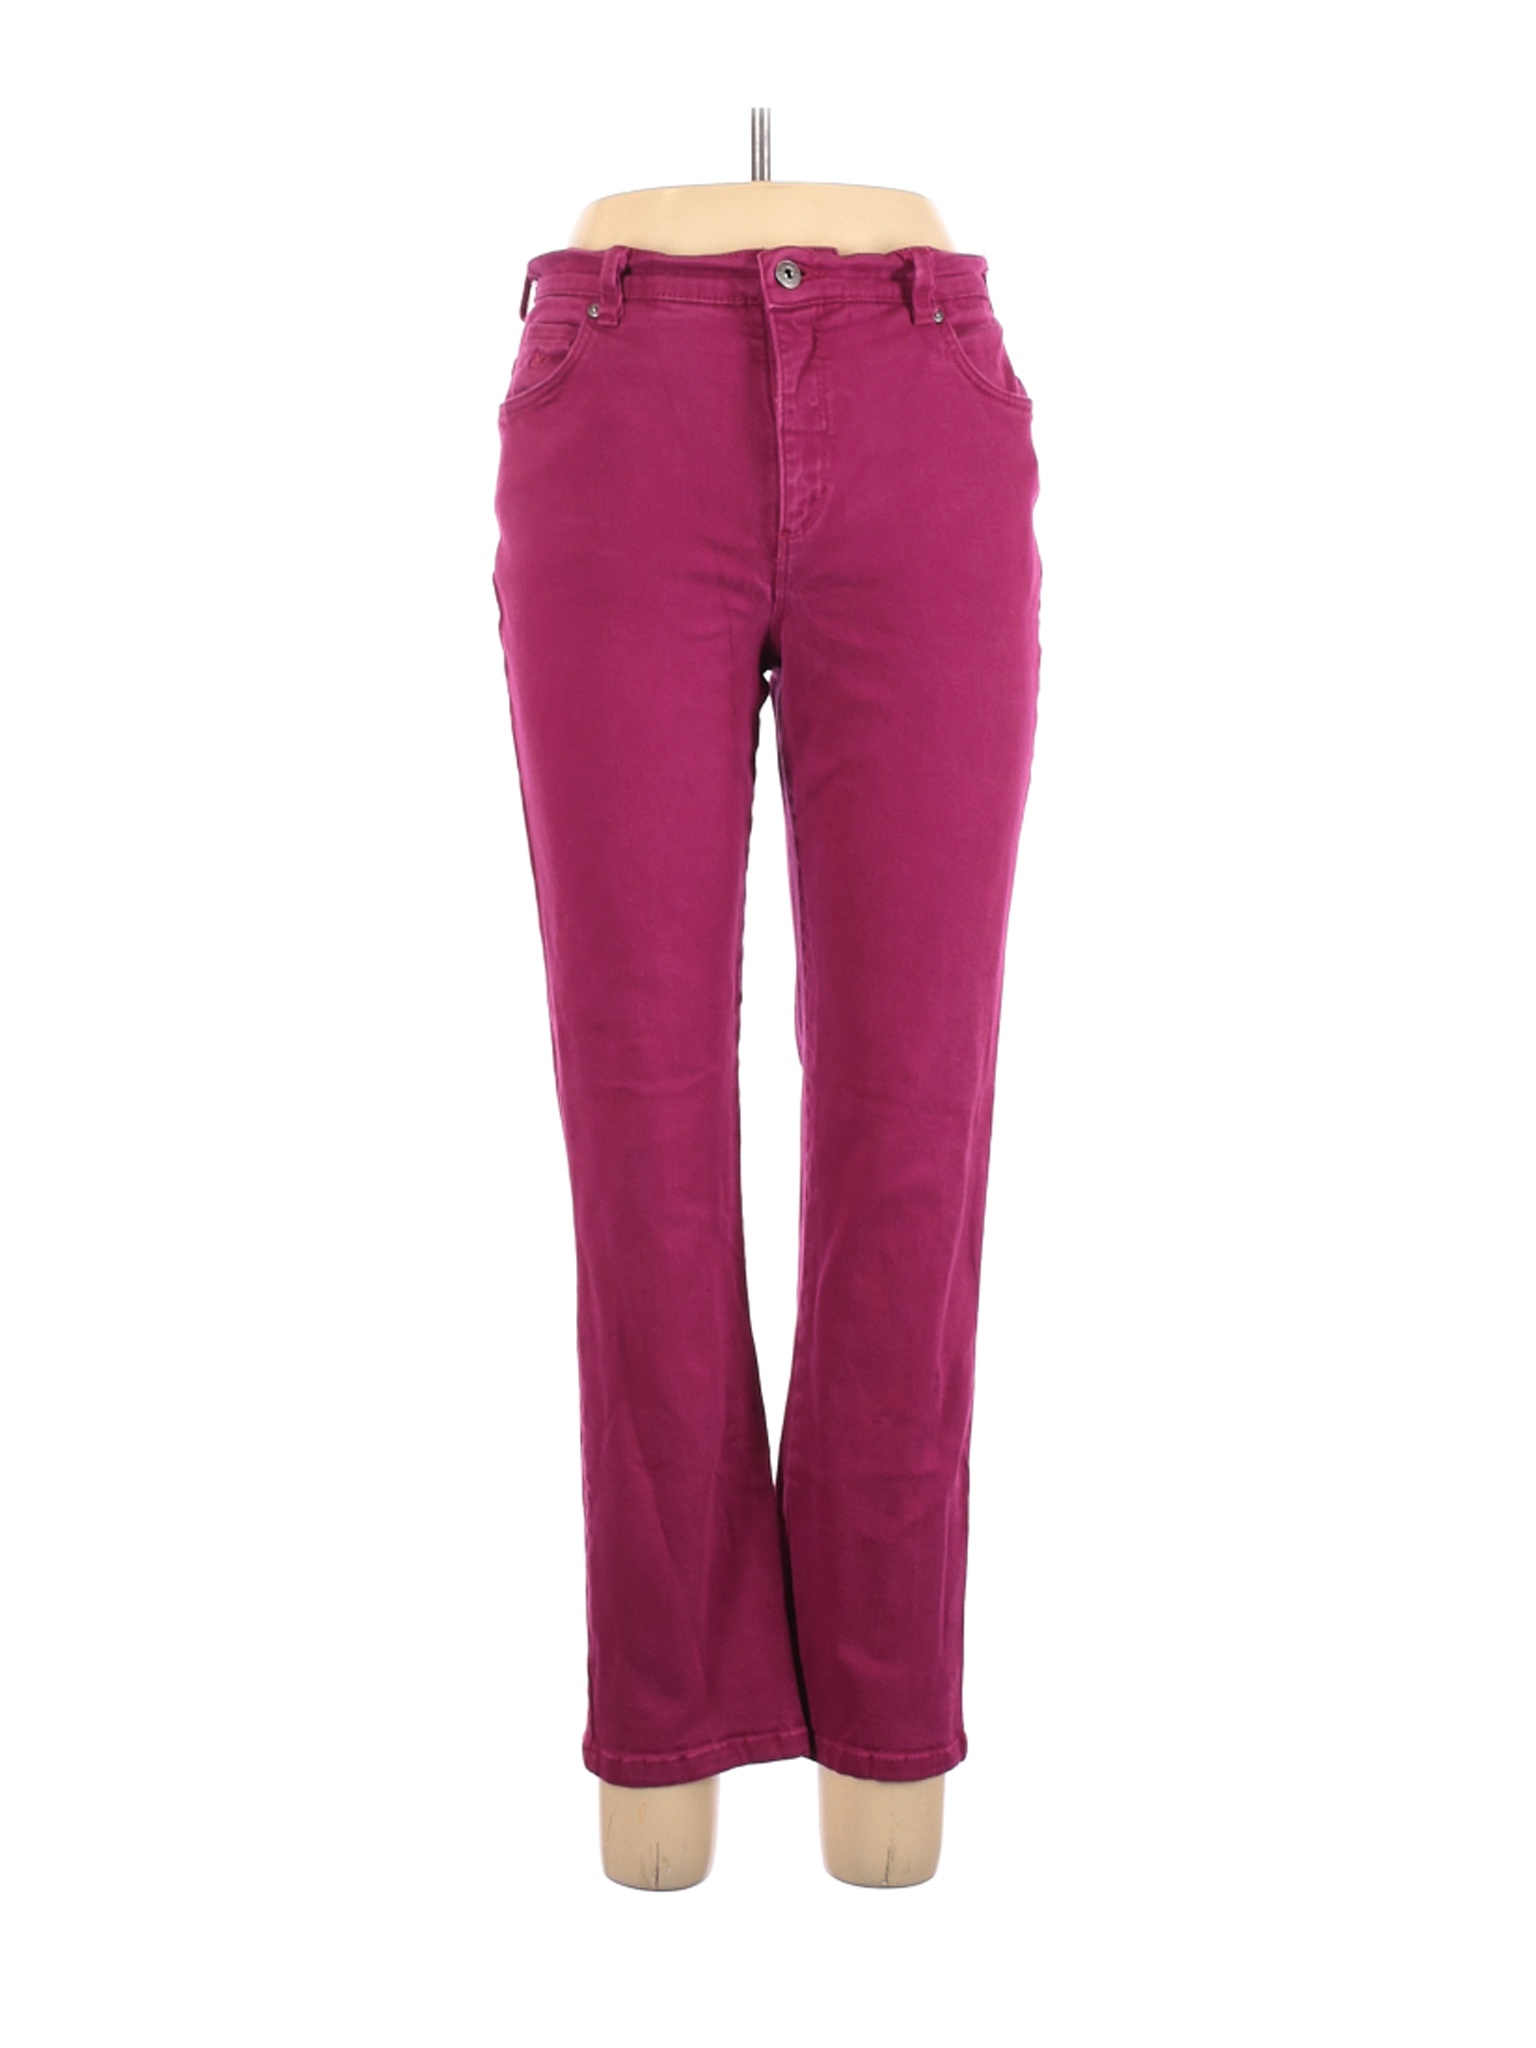 Gloria Vanderbilt Women Pink Jeans 10 | eBay